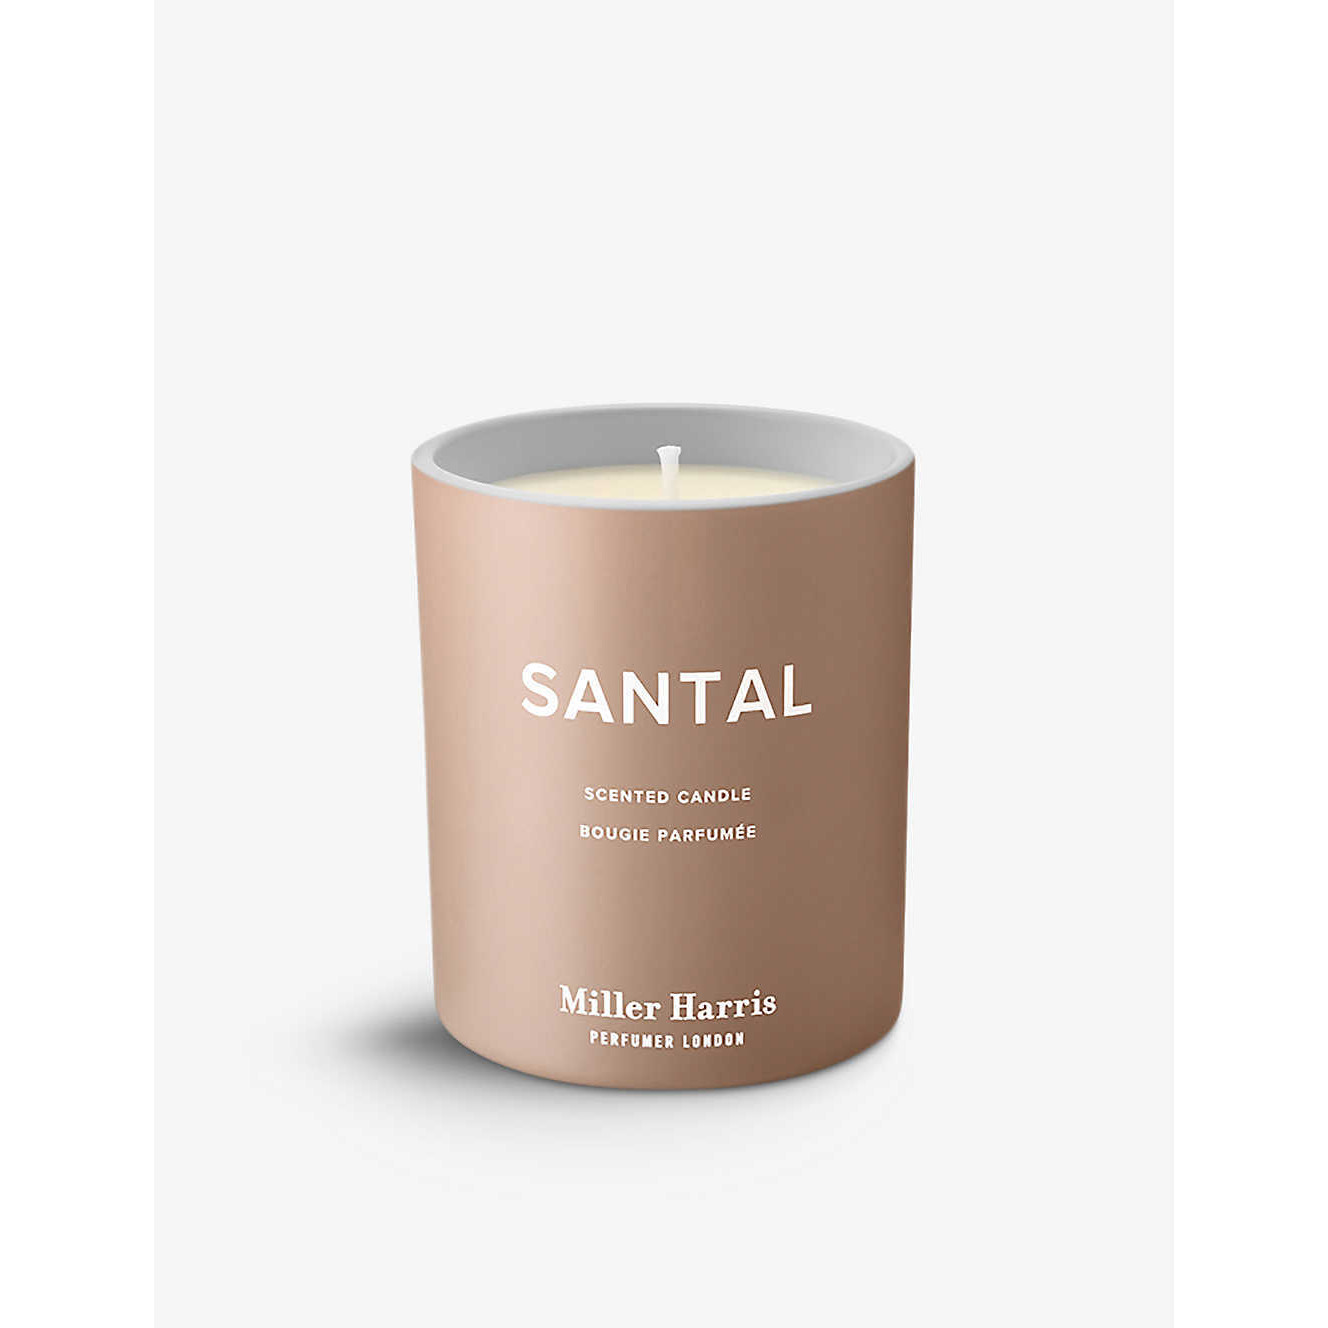 Santal natural wax scented candle 220g - image 1